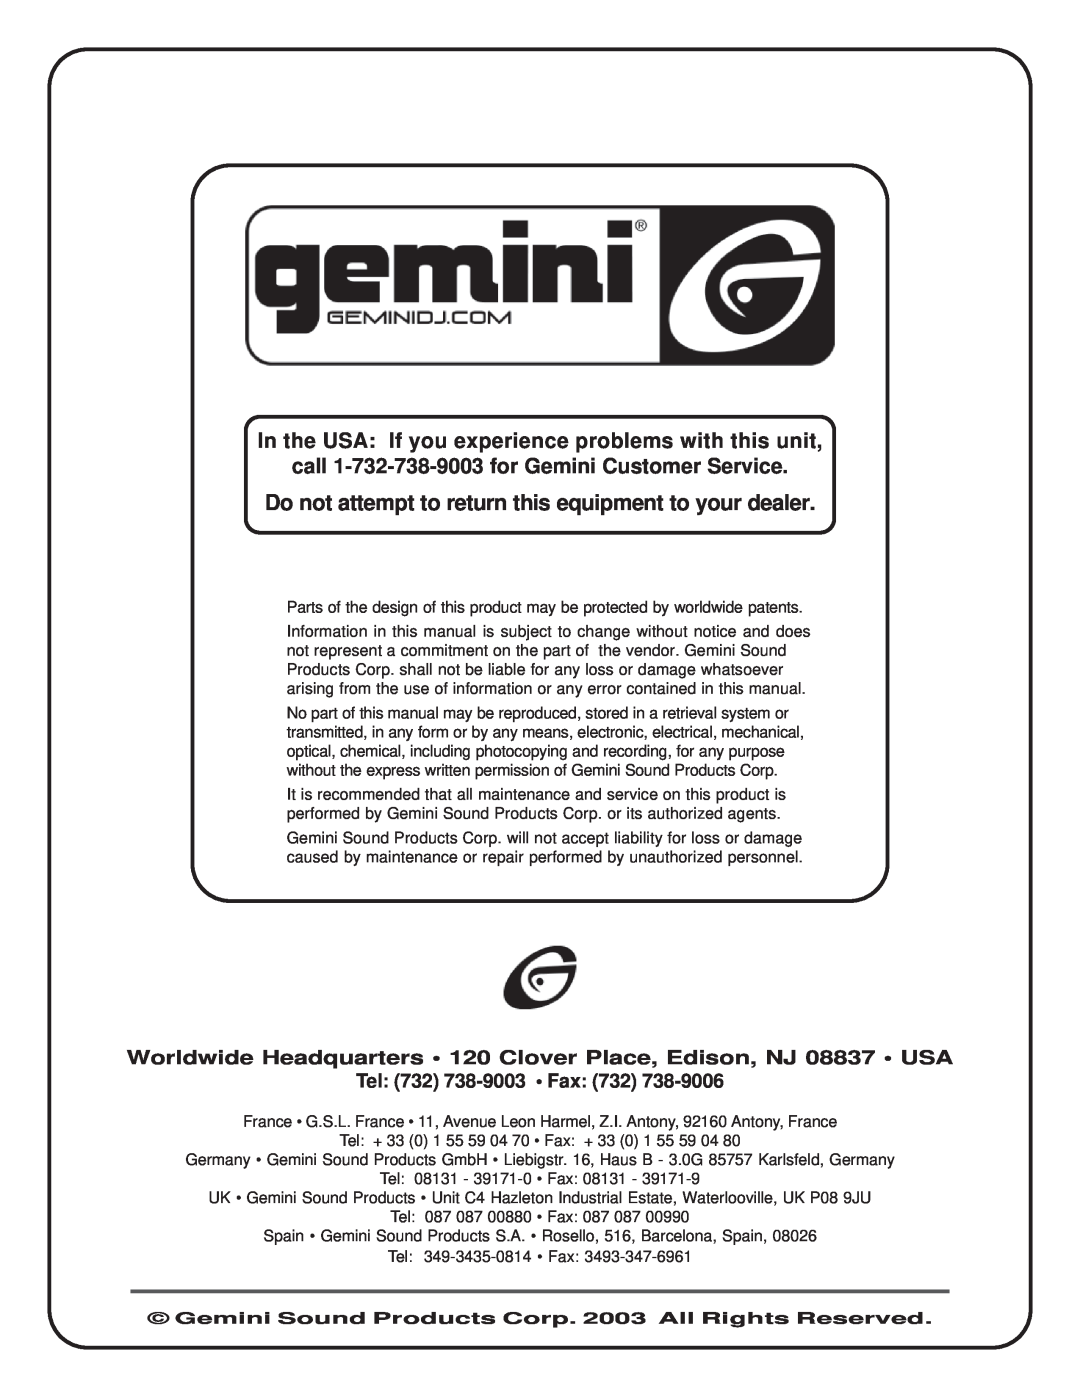 Gemini XL-1800Q IV manual call 1-732-738-9003for Gemini Customer Service, Tel 732 738-9003 Fax 